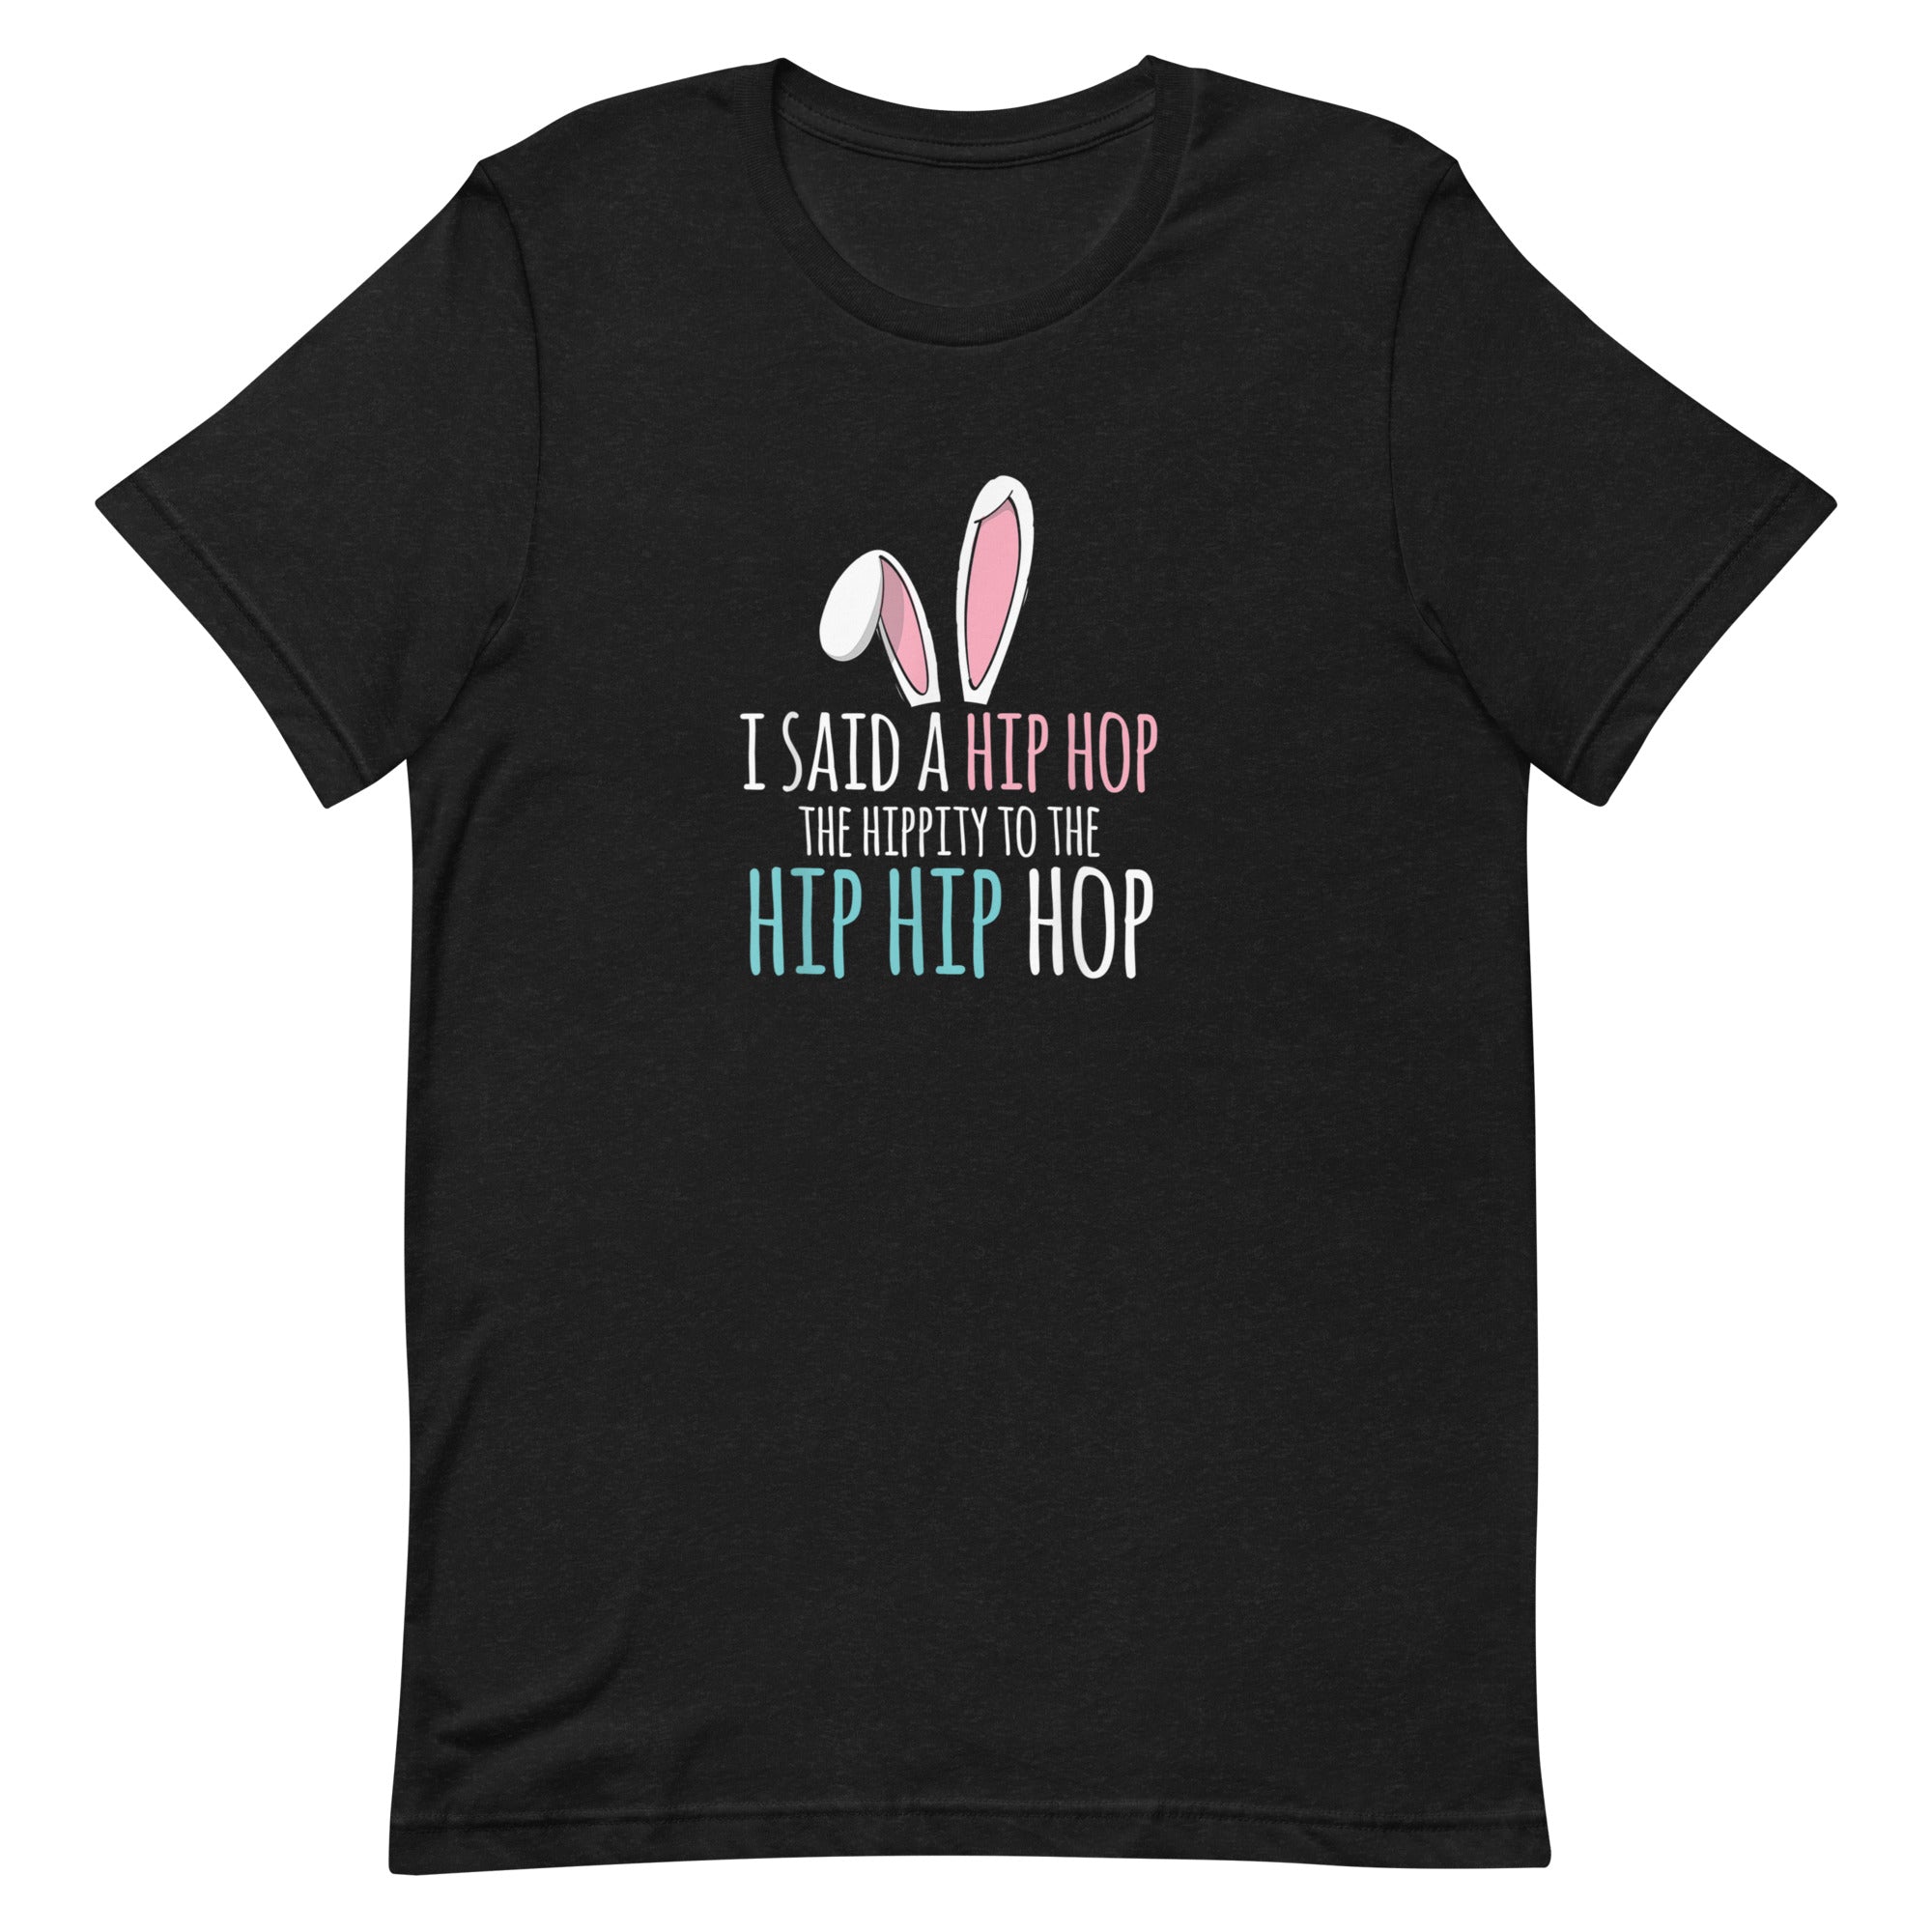 I SAID A HIP HOP HIPPITY TO THE HIP HIP HOP Unisex t-shirt